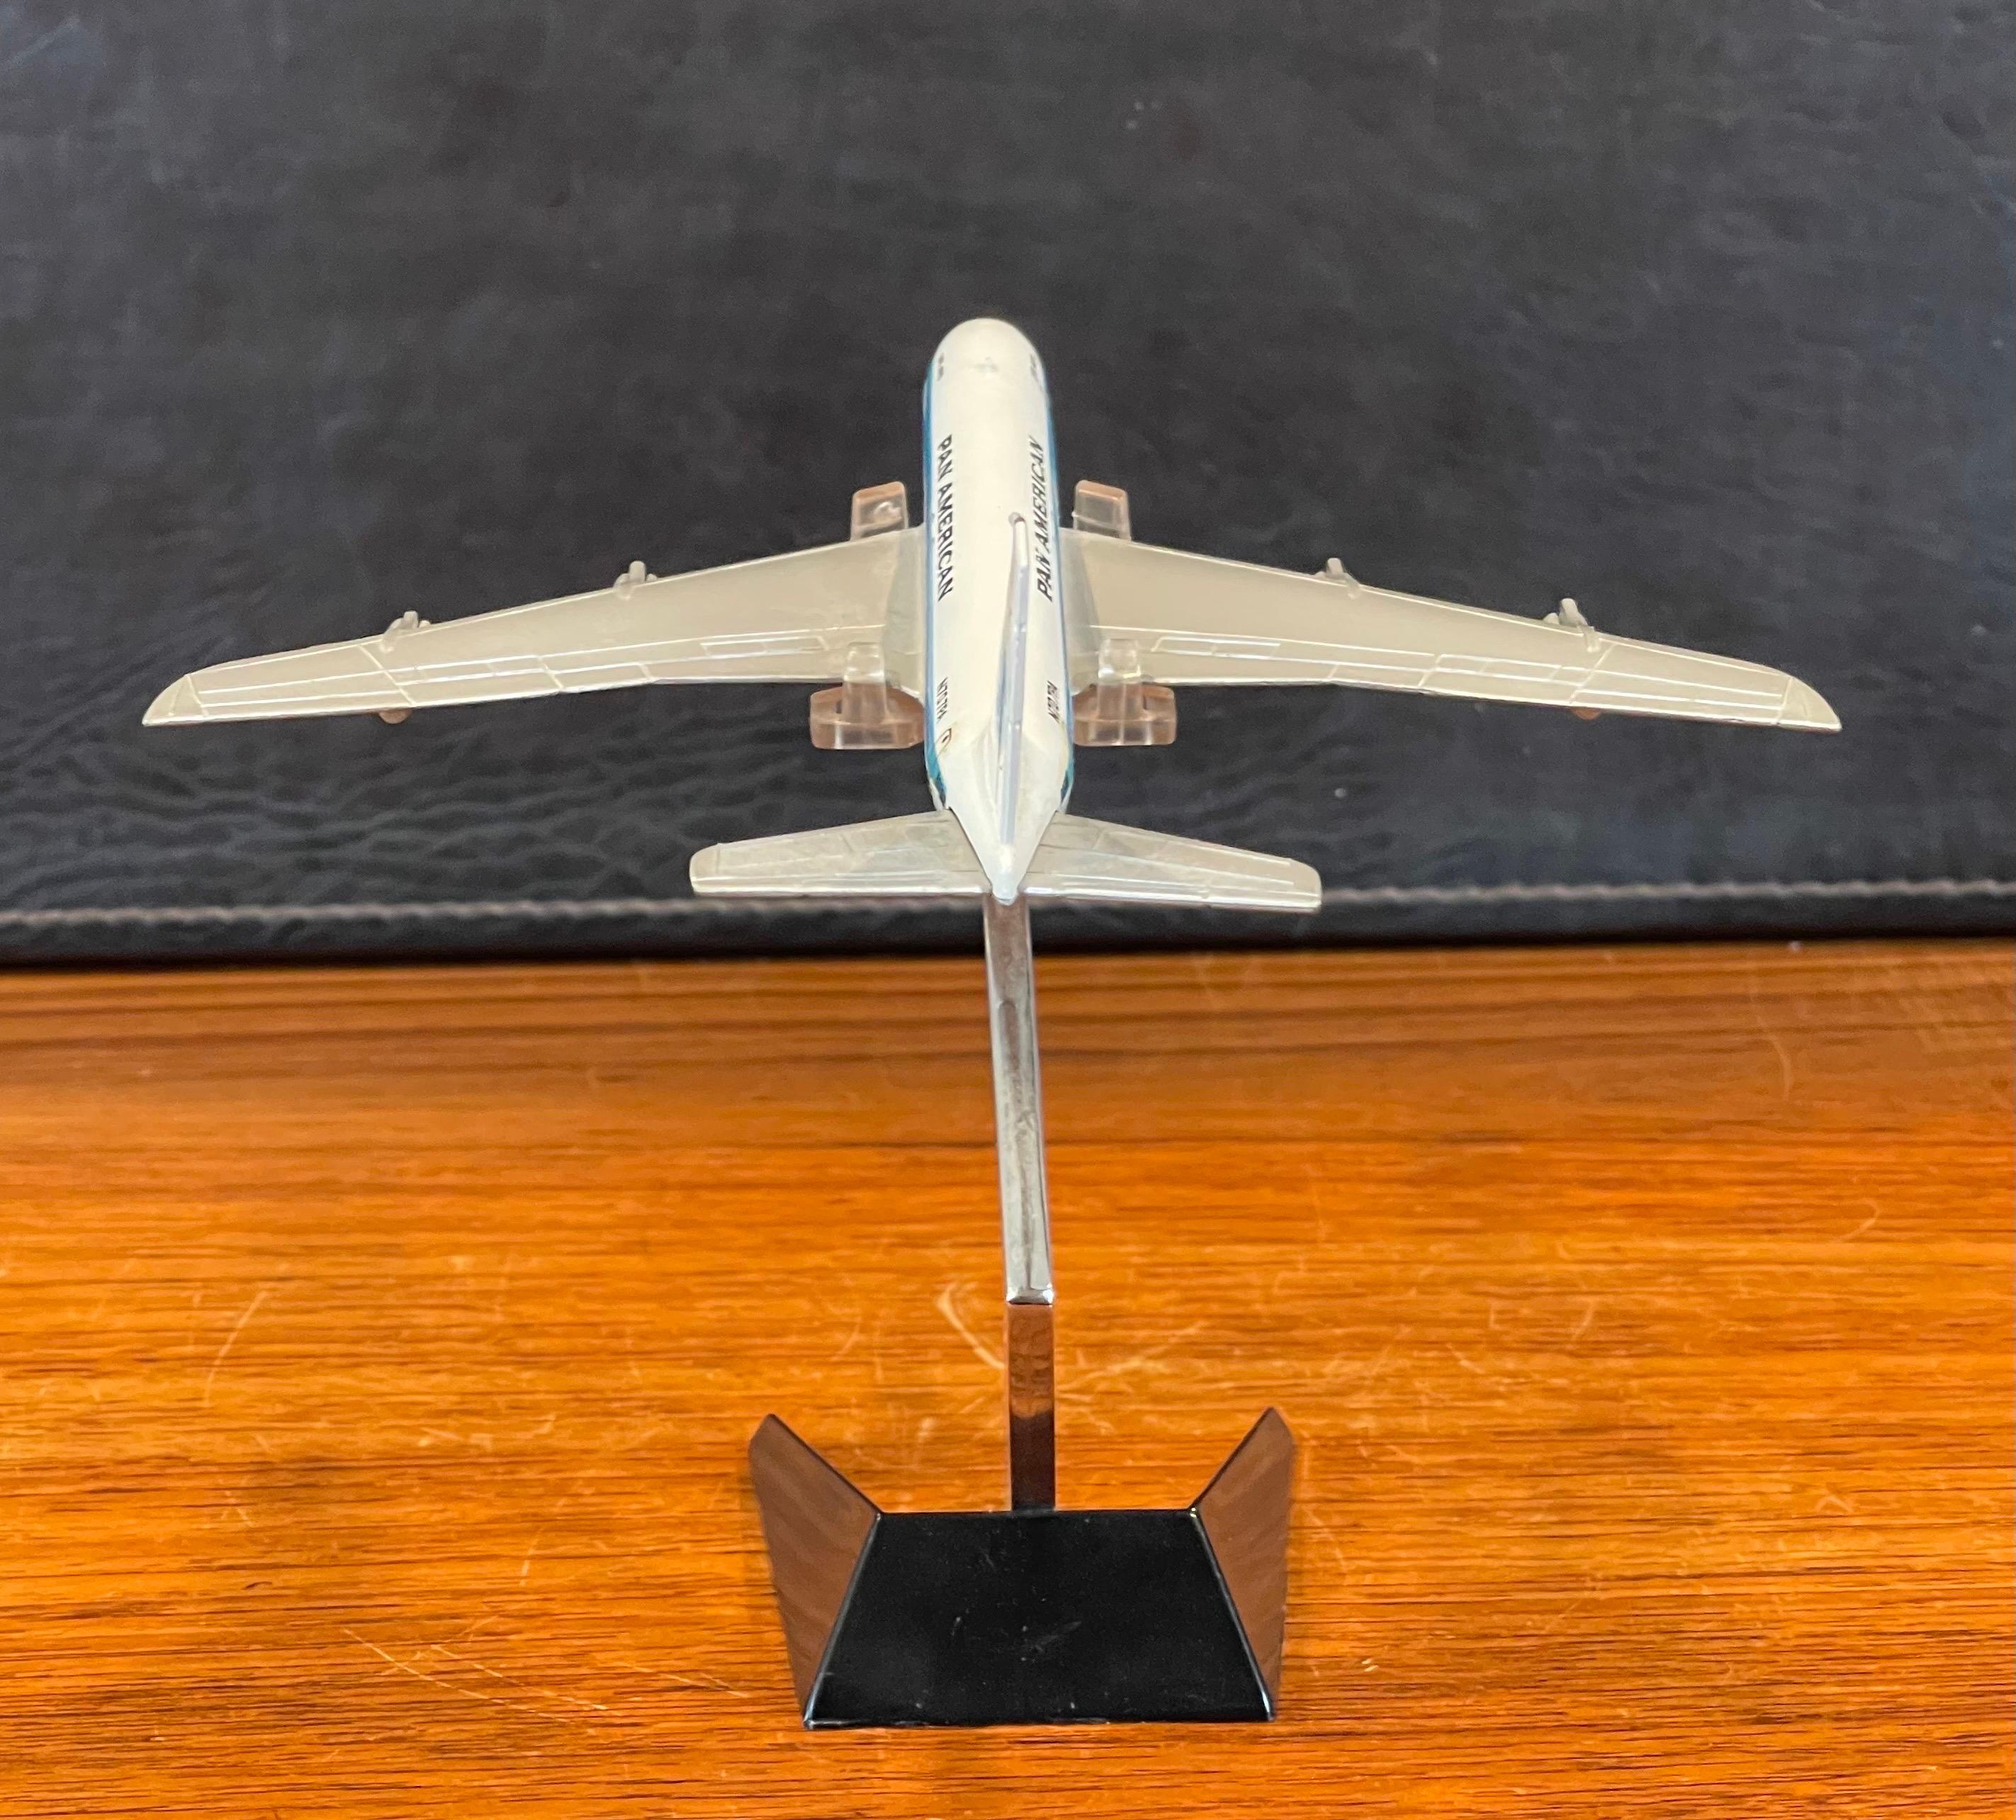 Metal Pan American Airlines Boeing 707 Jetliner / Airplane Contractor Desk Model